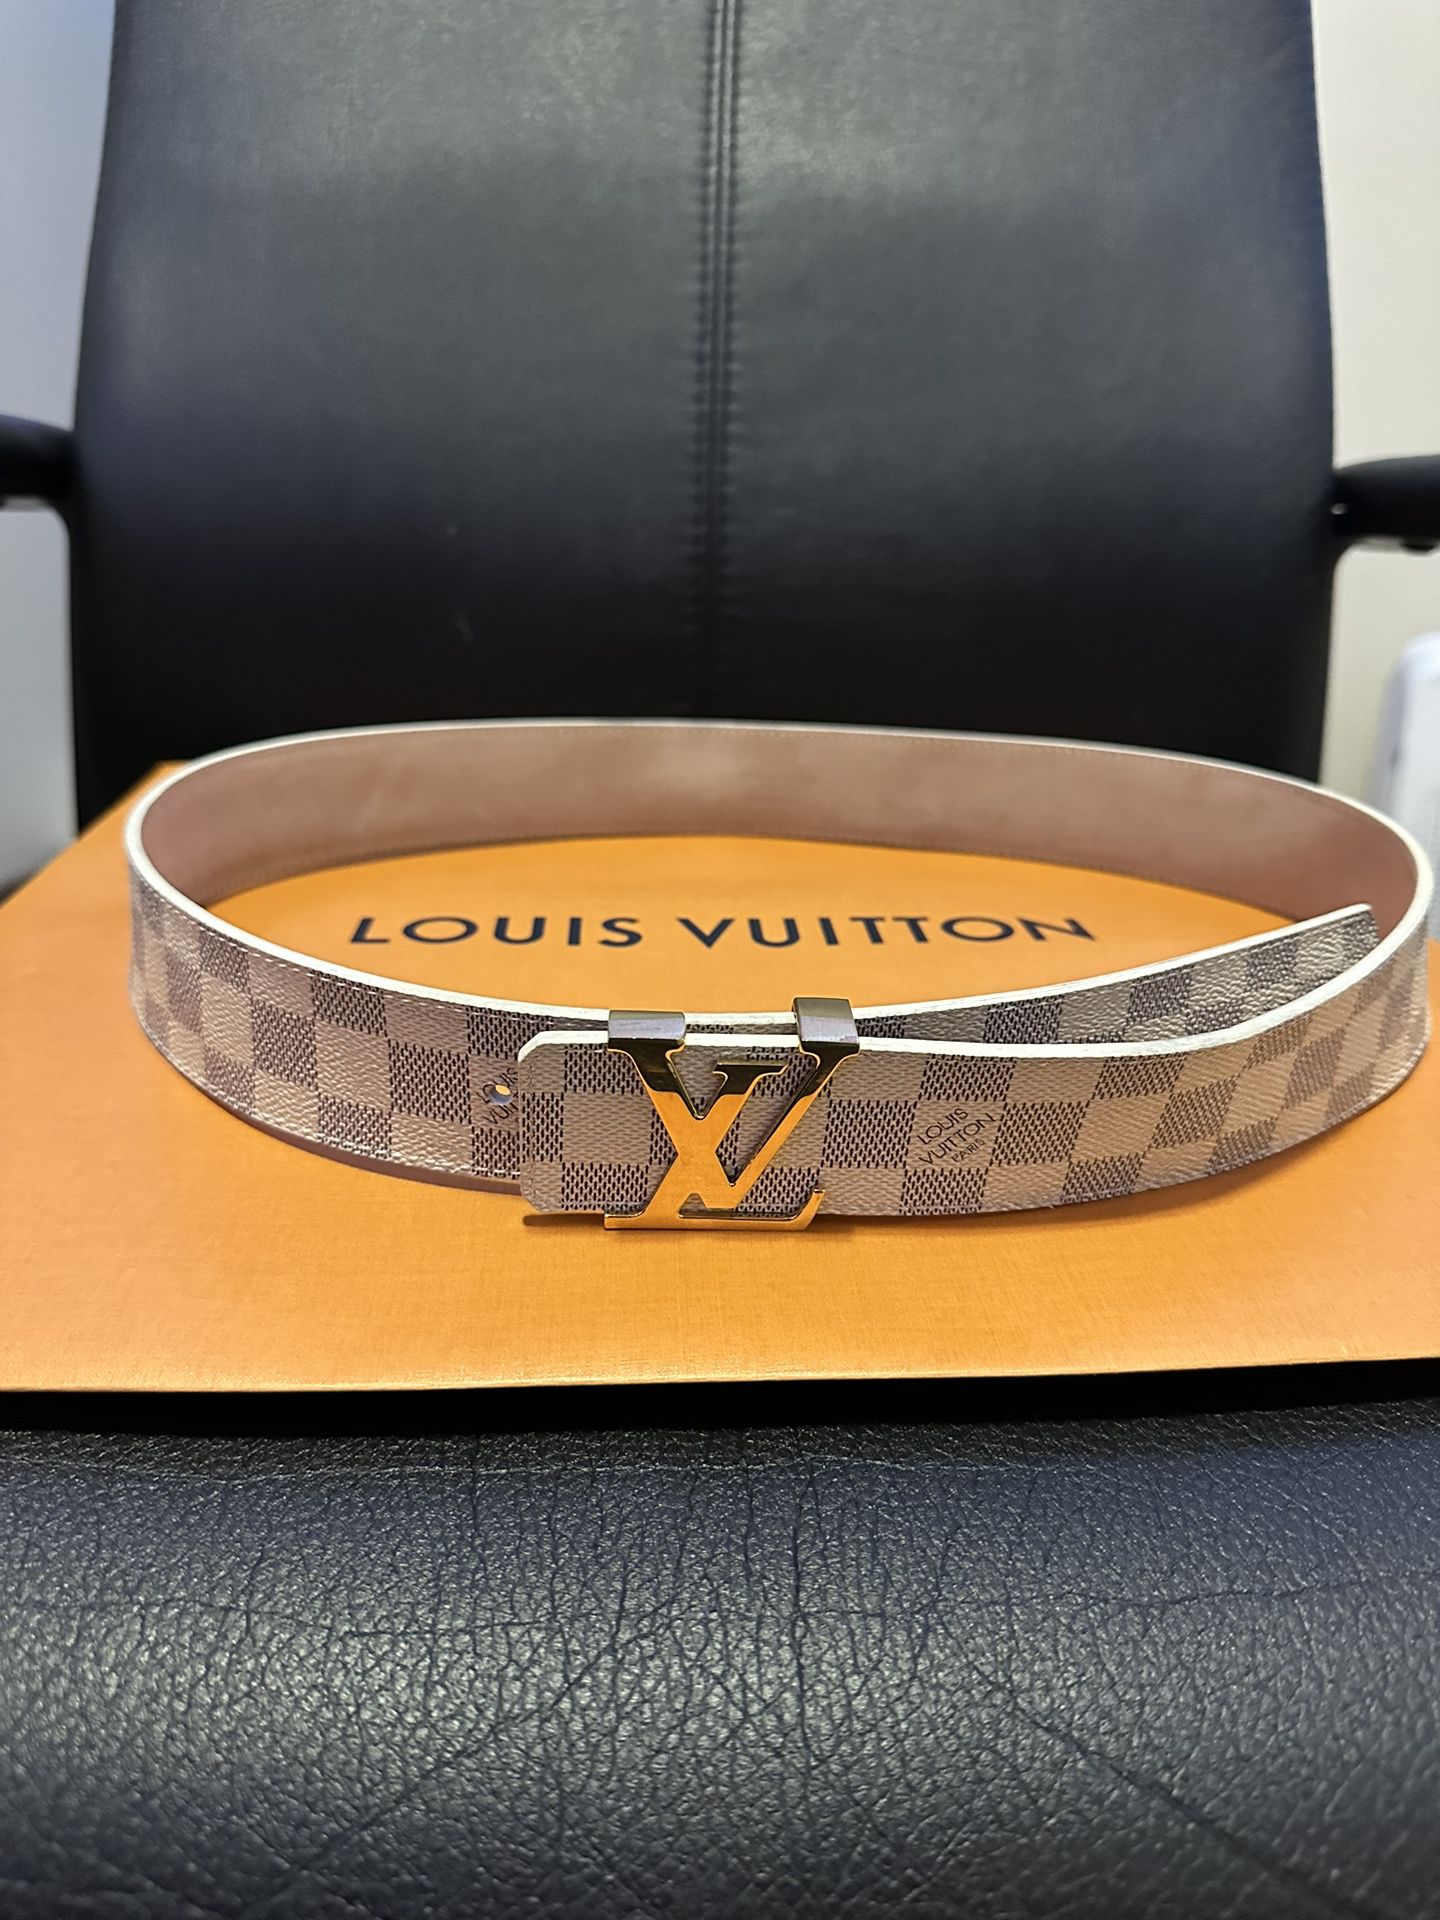 Louis Vuitton Azur Belt 95 for Sale in Cincinnati, OH - OfferUp